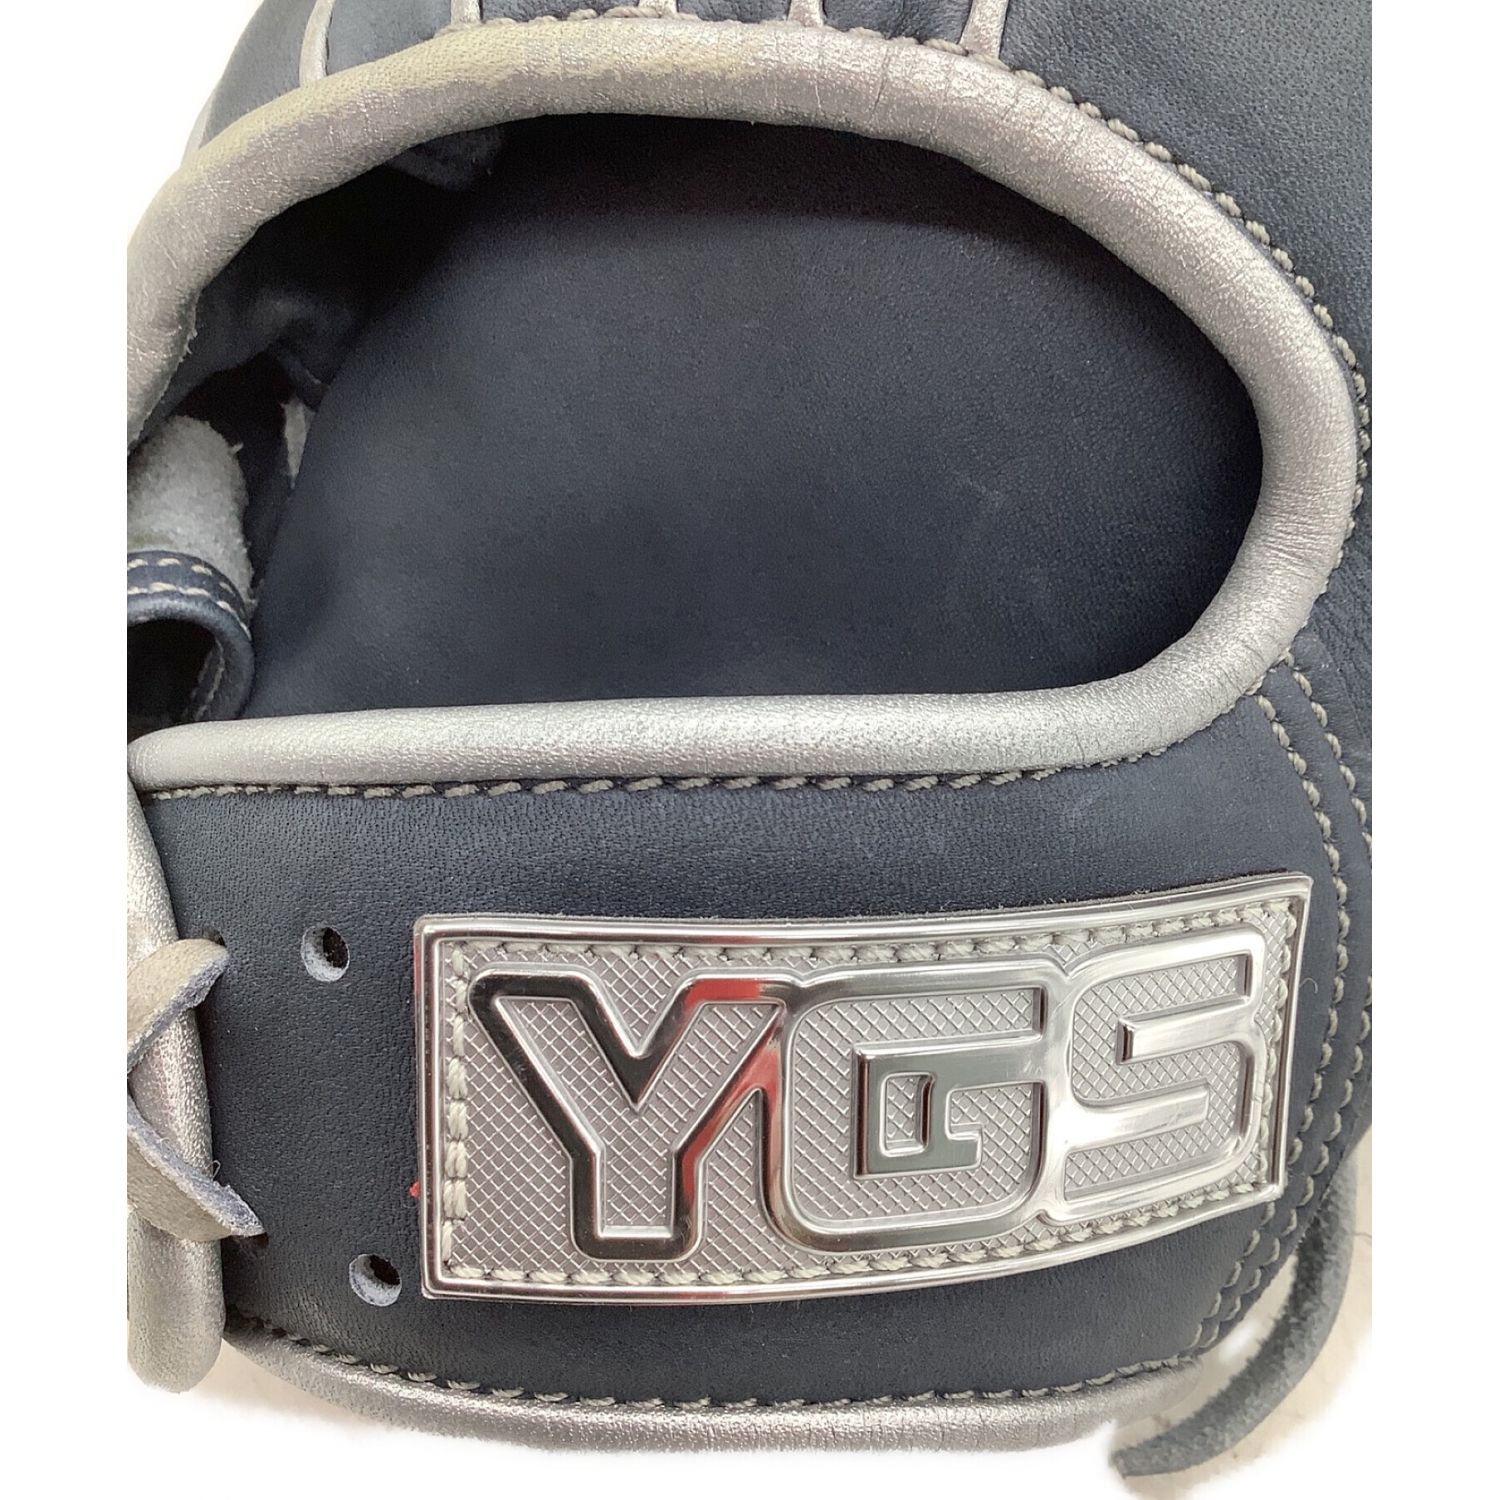 YGS (山本グラブスタジオ) 軟式グローブ 約28cm ネイビー YAMAMOTO GLOVE STUDIO PRO LINE 内野用 プロ